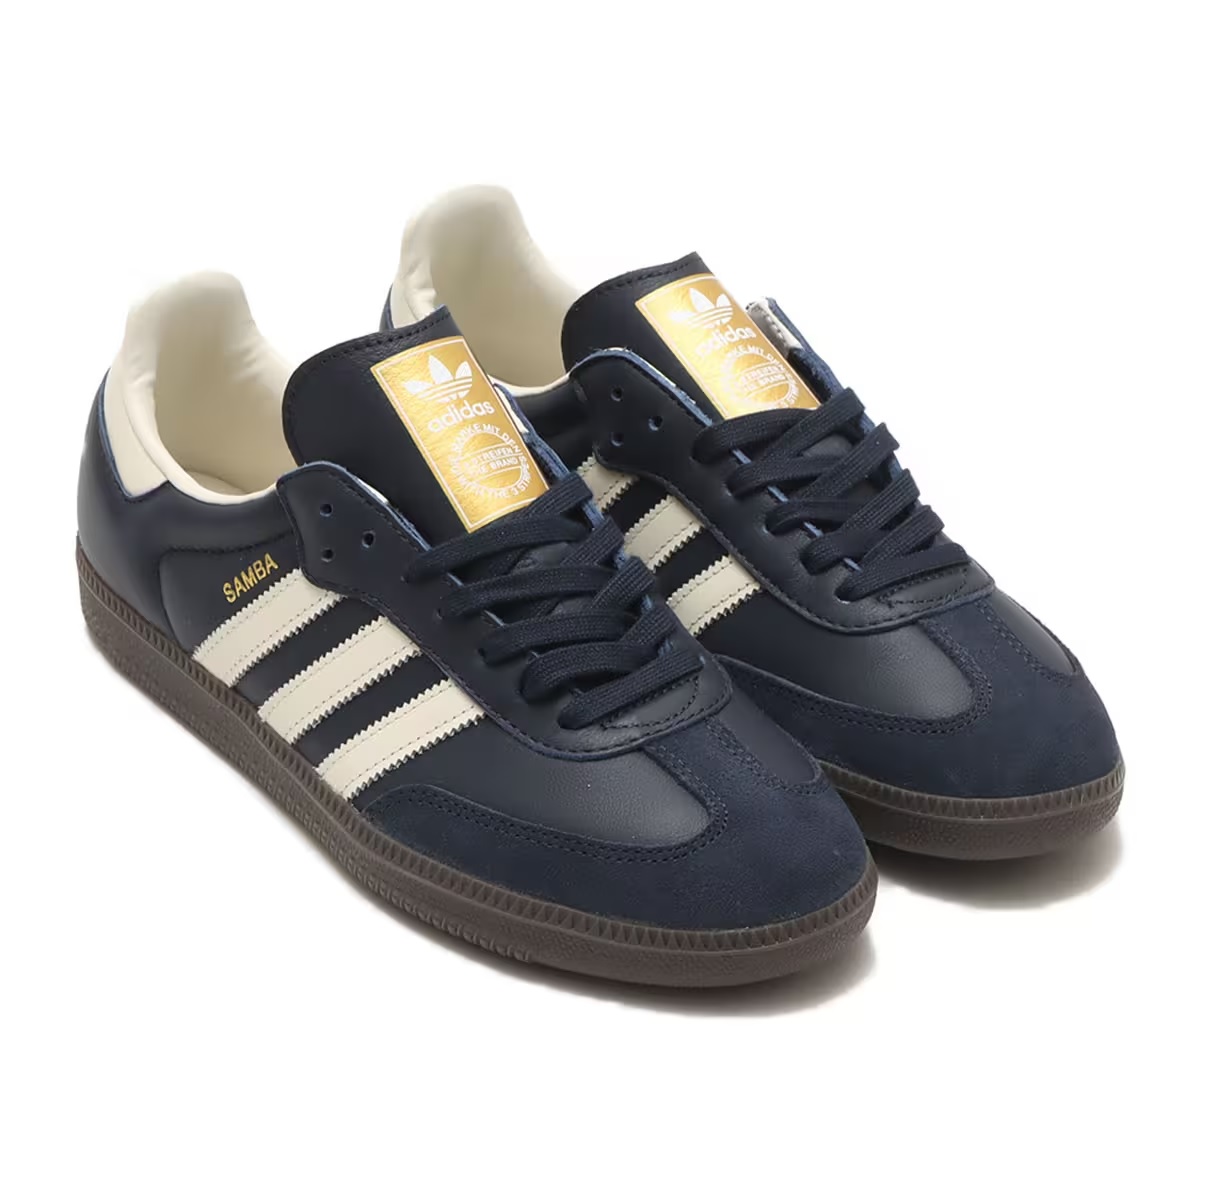 Adidas Samba OG Night Navy $805 @ Endclothing – BIY Roamer